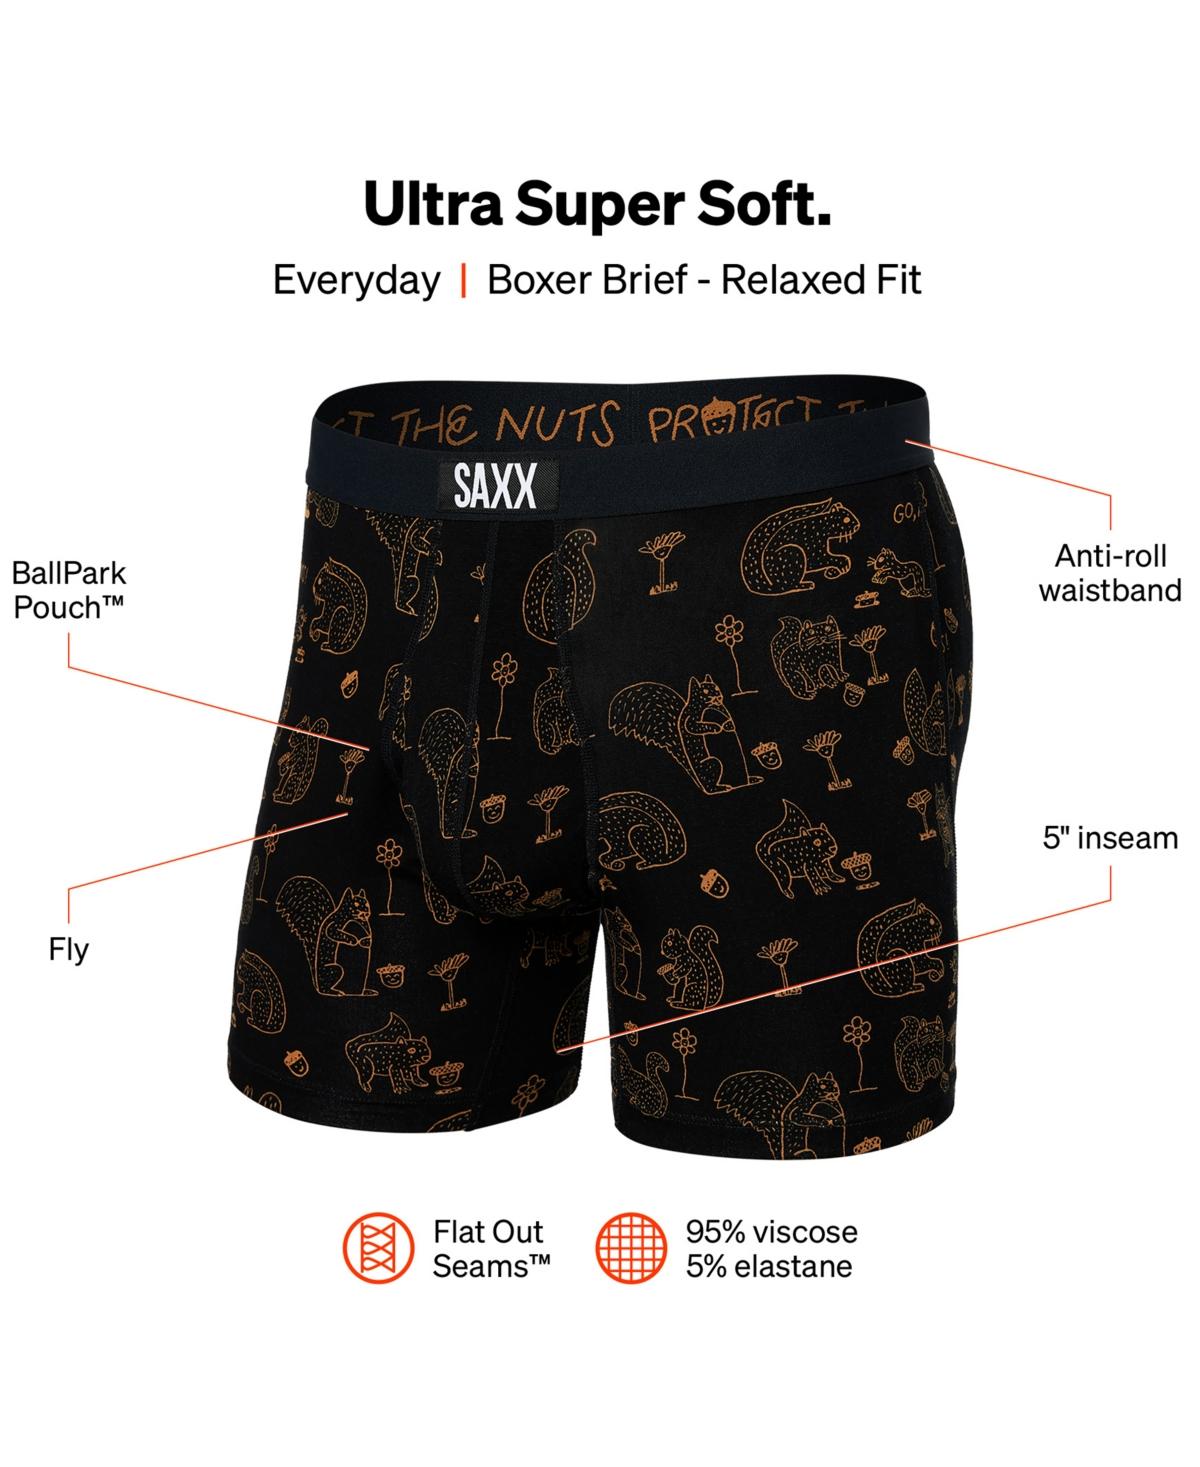 https://cdna.lystit.com/photos/macys/33e9ecc1/saxx-underwear-co-Protect-The-Nuts-Relaxed-Fit-Ultra-Super-Soft-Boxer-Briefs.jpeg